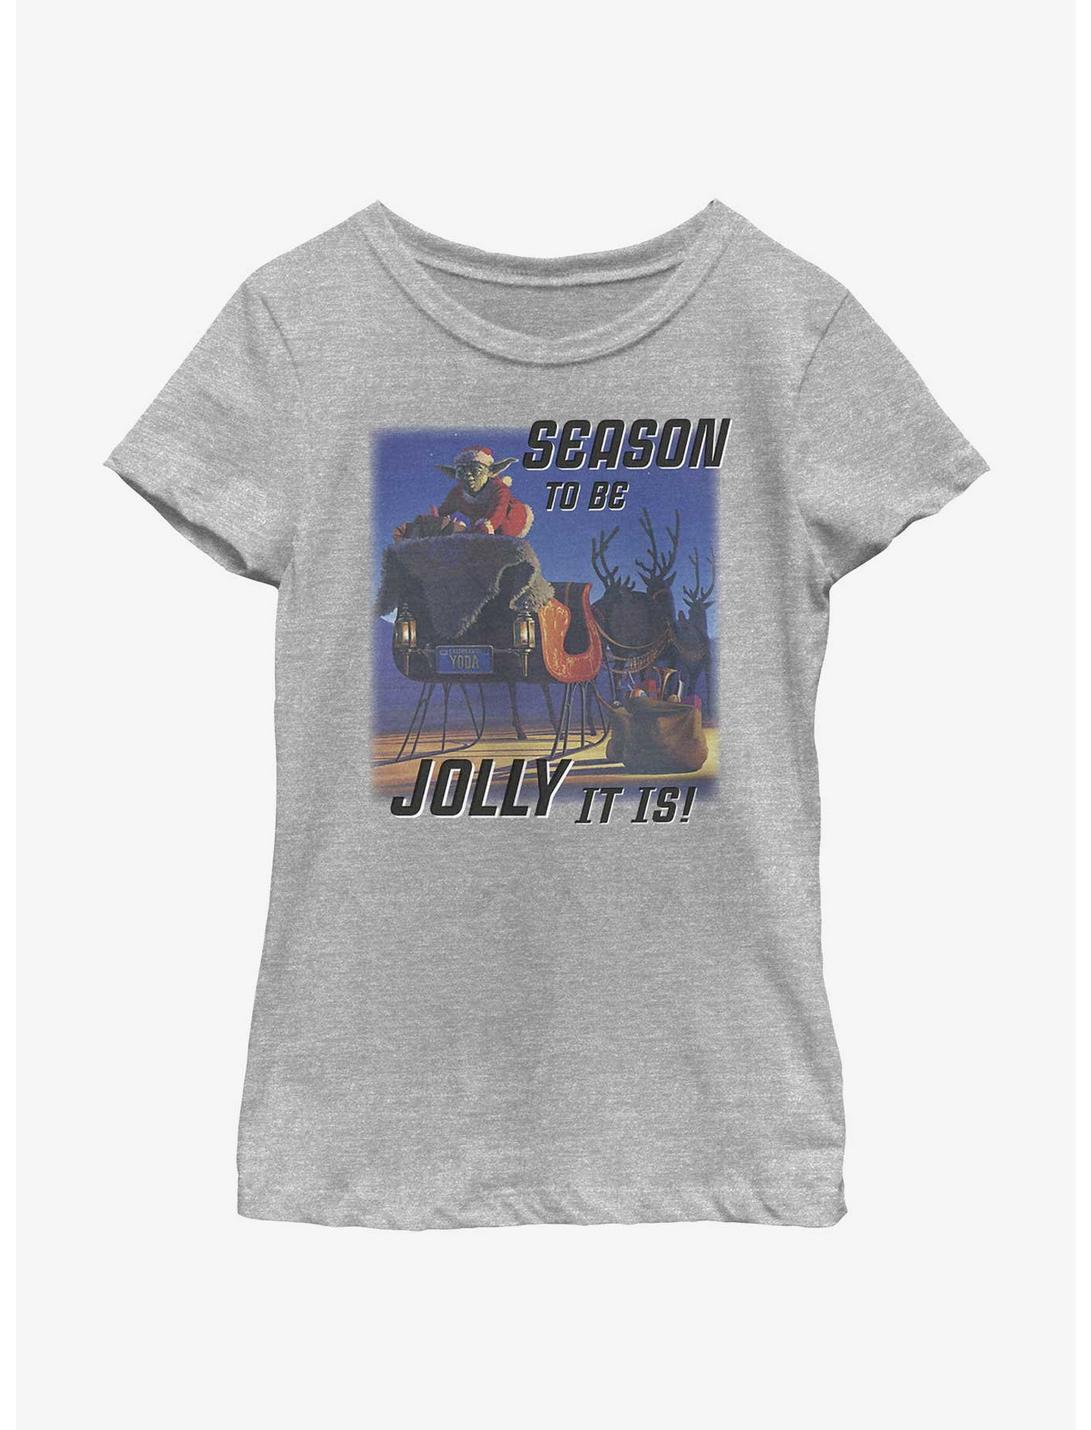 Star Wars Yoda Season To Be Jolly It Is Youth Girls T-Shirt, ATH HTR, hi-res